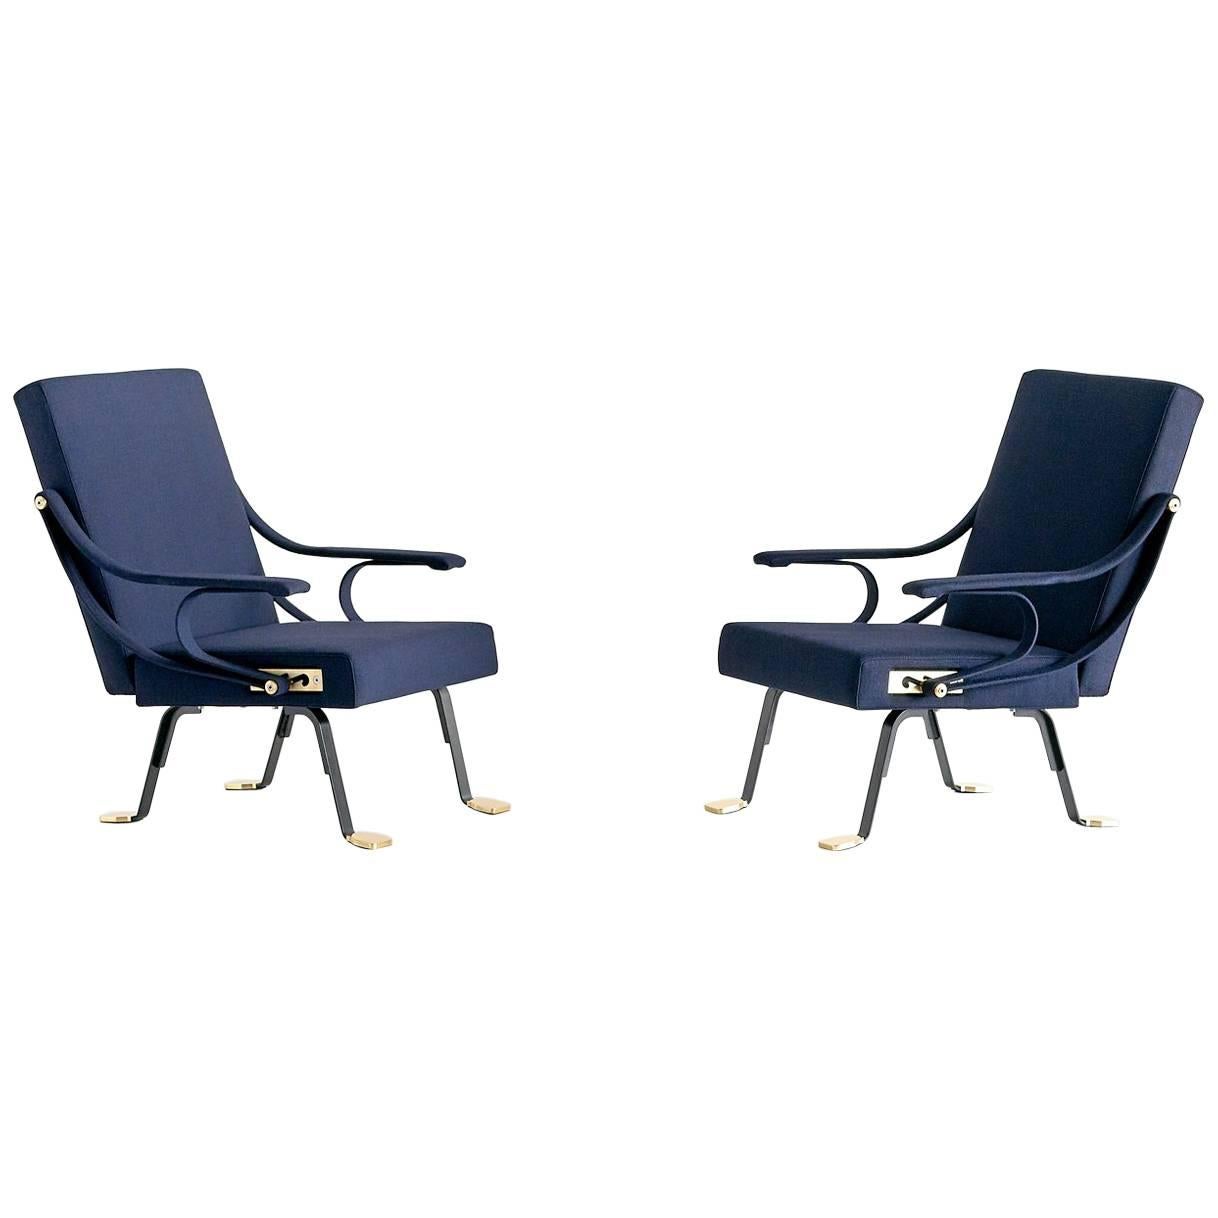 Pair of Ignazio Gardella Digamma Armchairs in Blue Raf Simons for Kvadrat Fabric